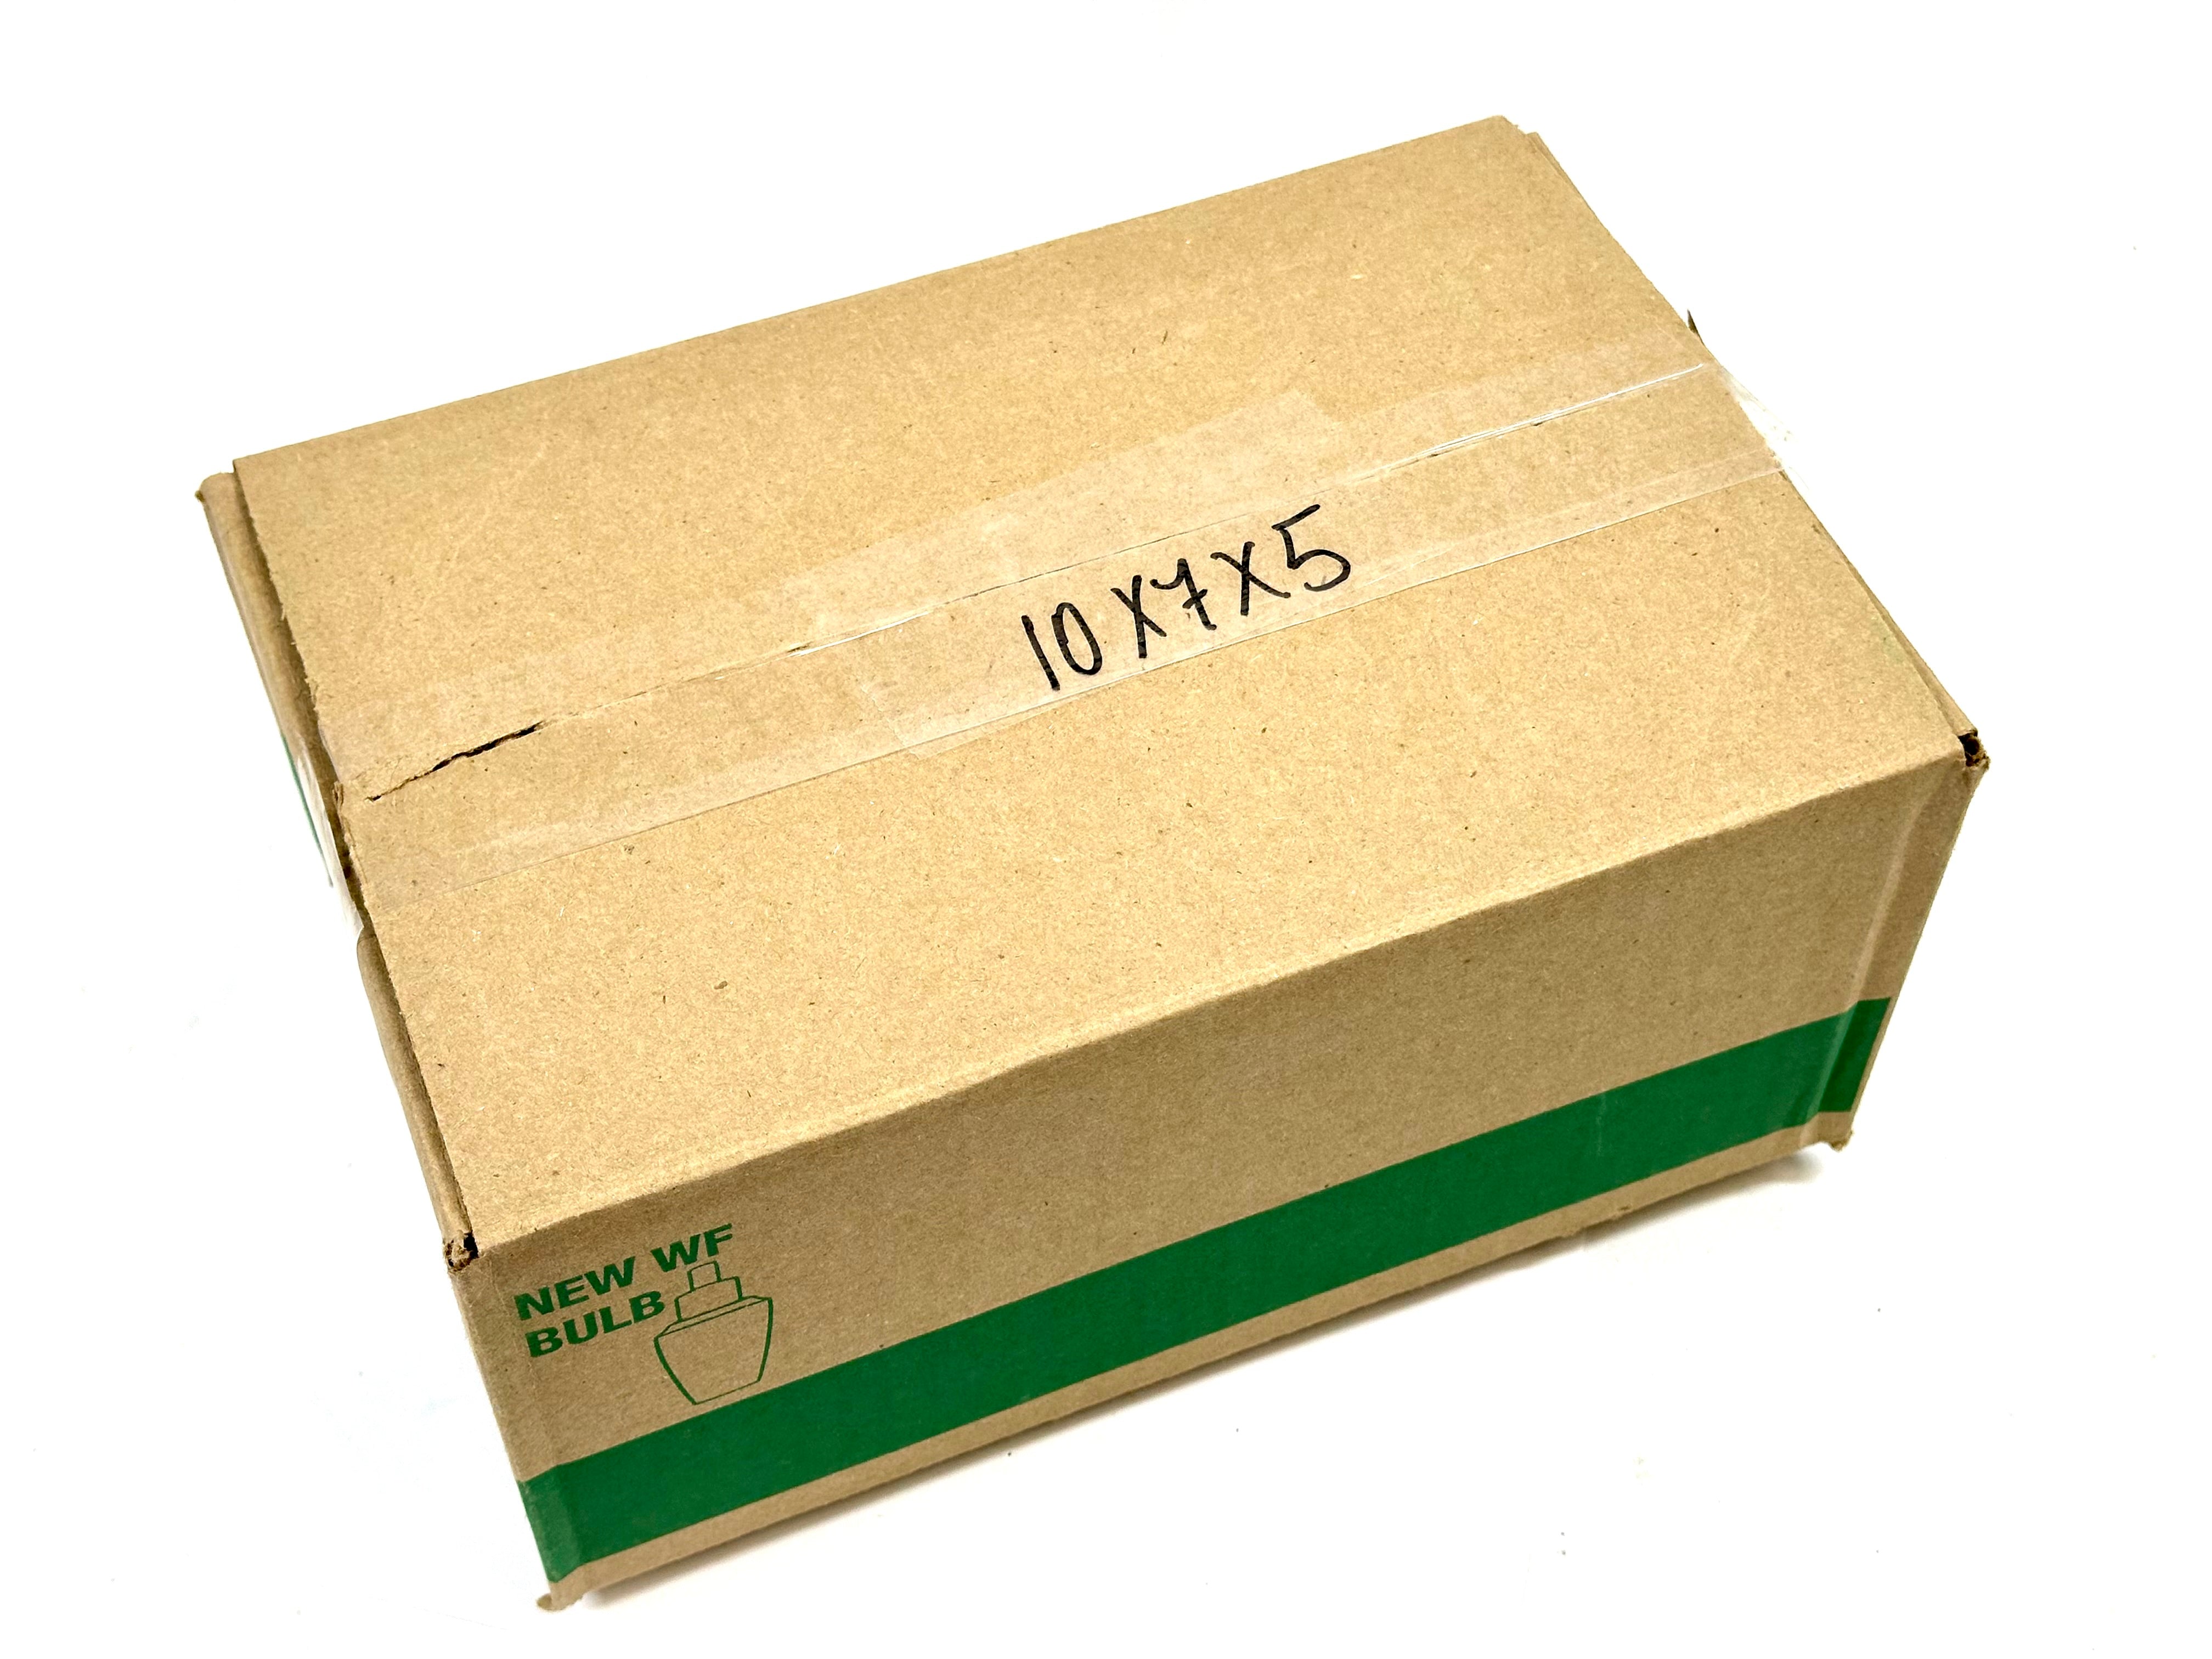 **Randomly** Assorted Mystery RC Junk Box